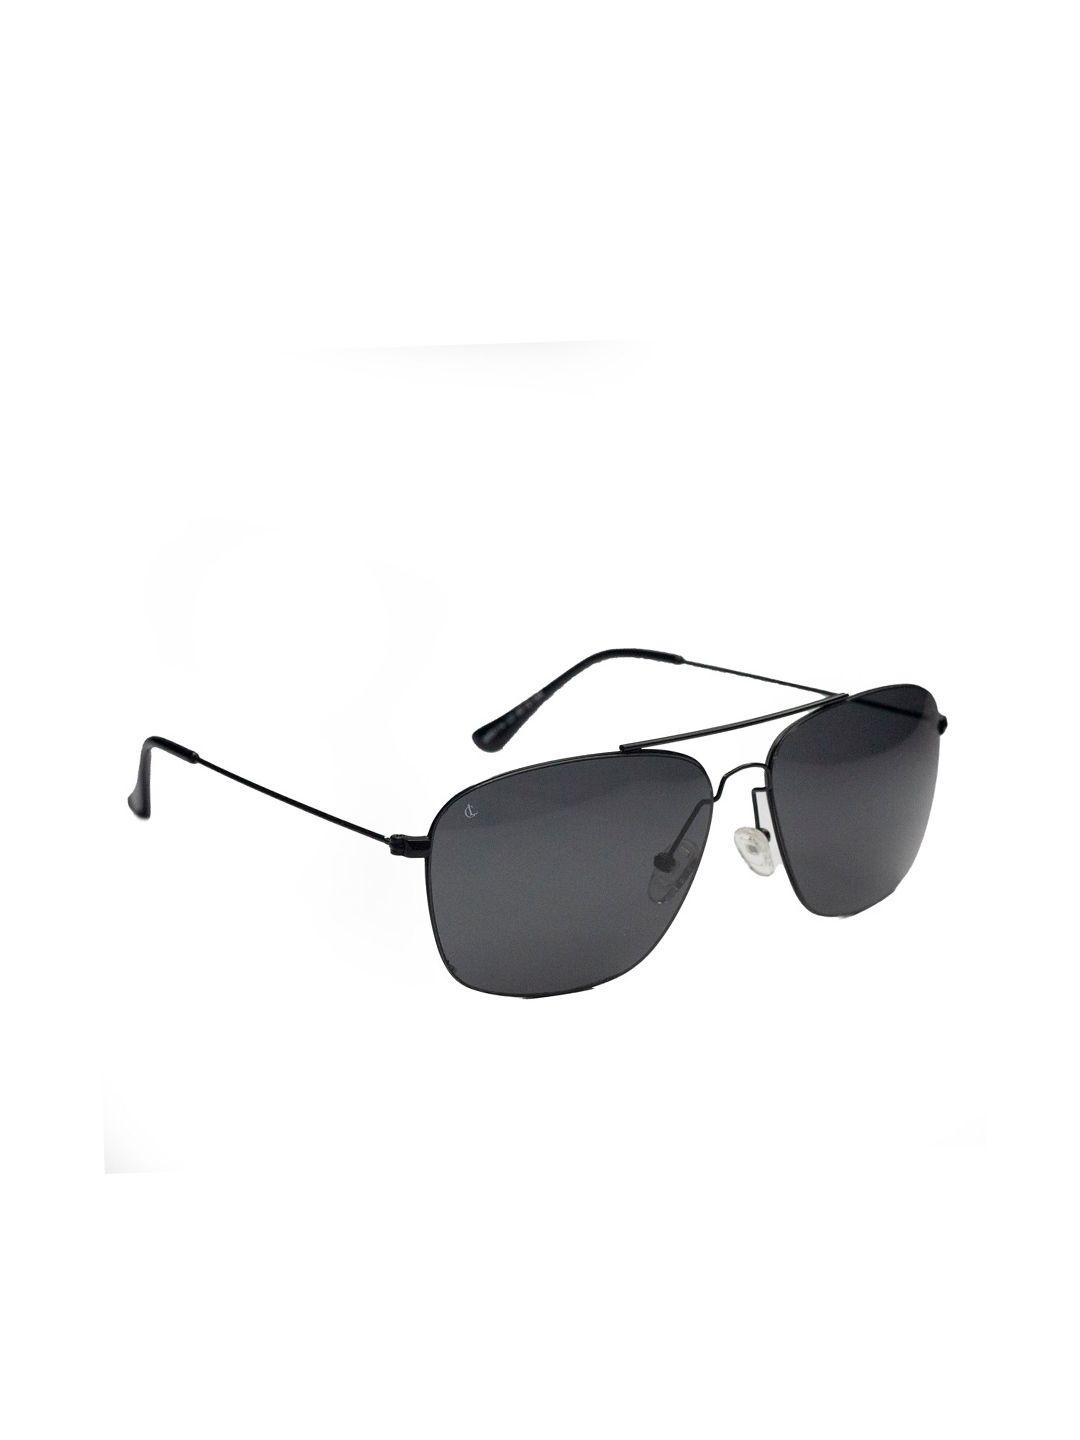 charles london unisex grey lens & black square sunglasses mr 9114 c2 60 s